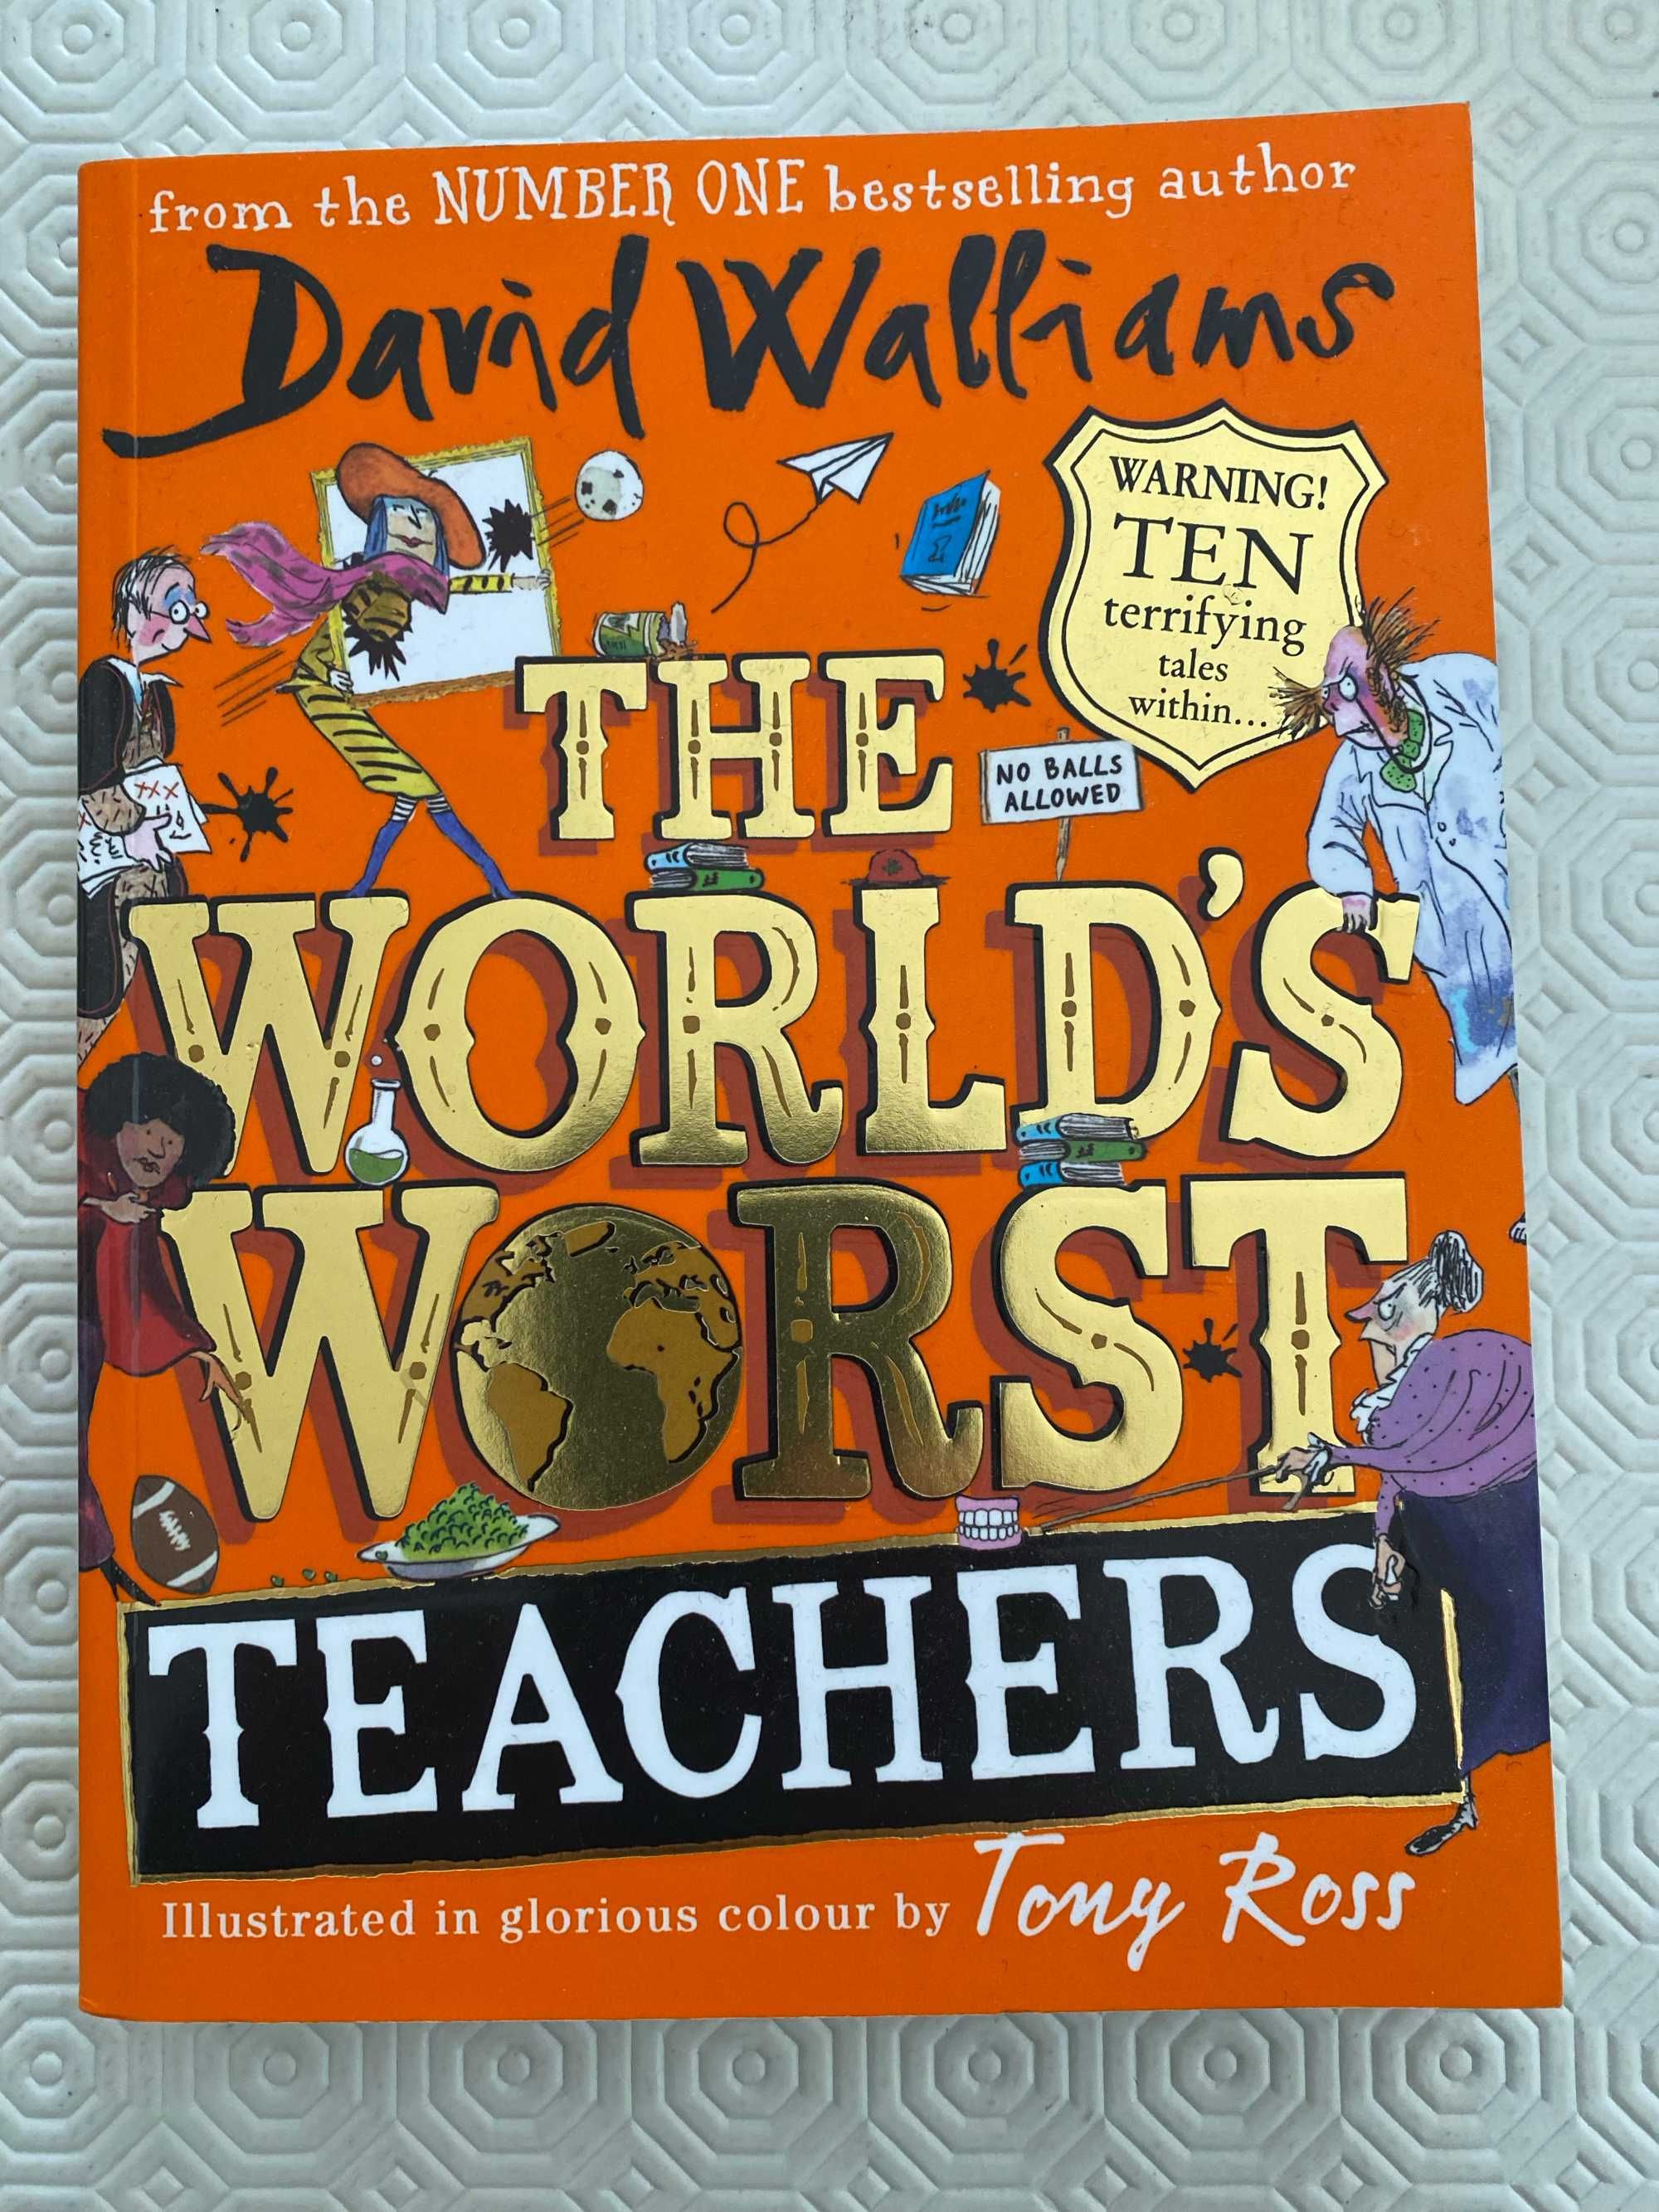 David Walliams - The world's worst teachers